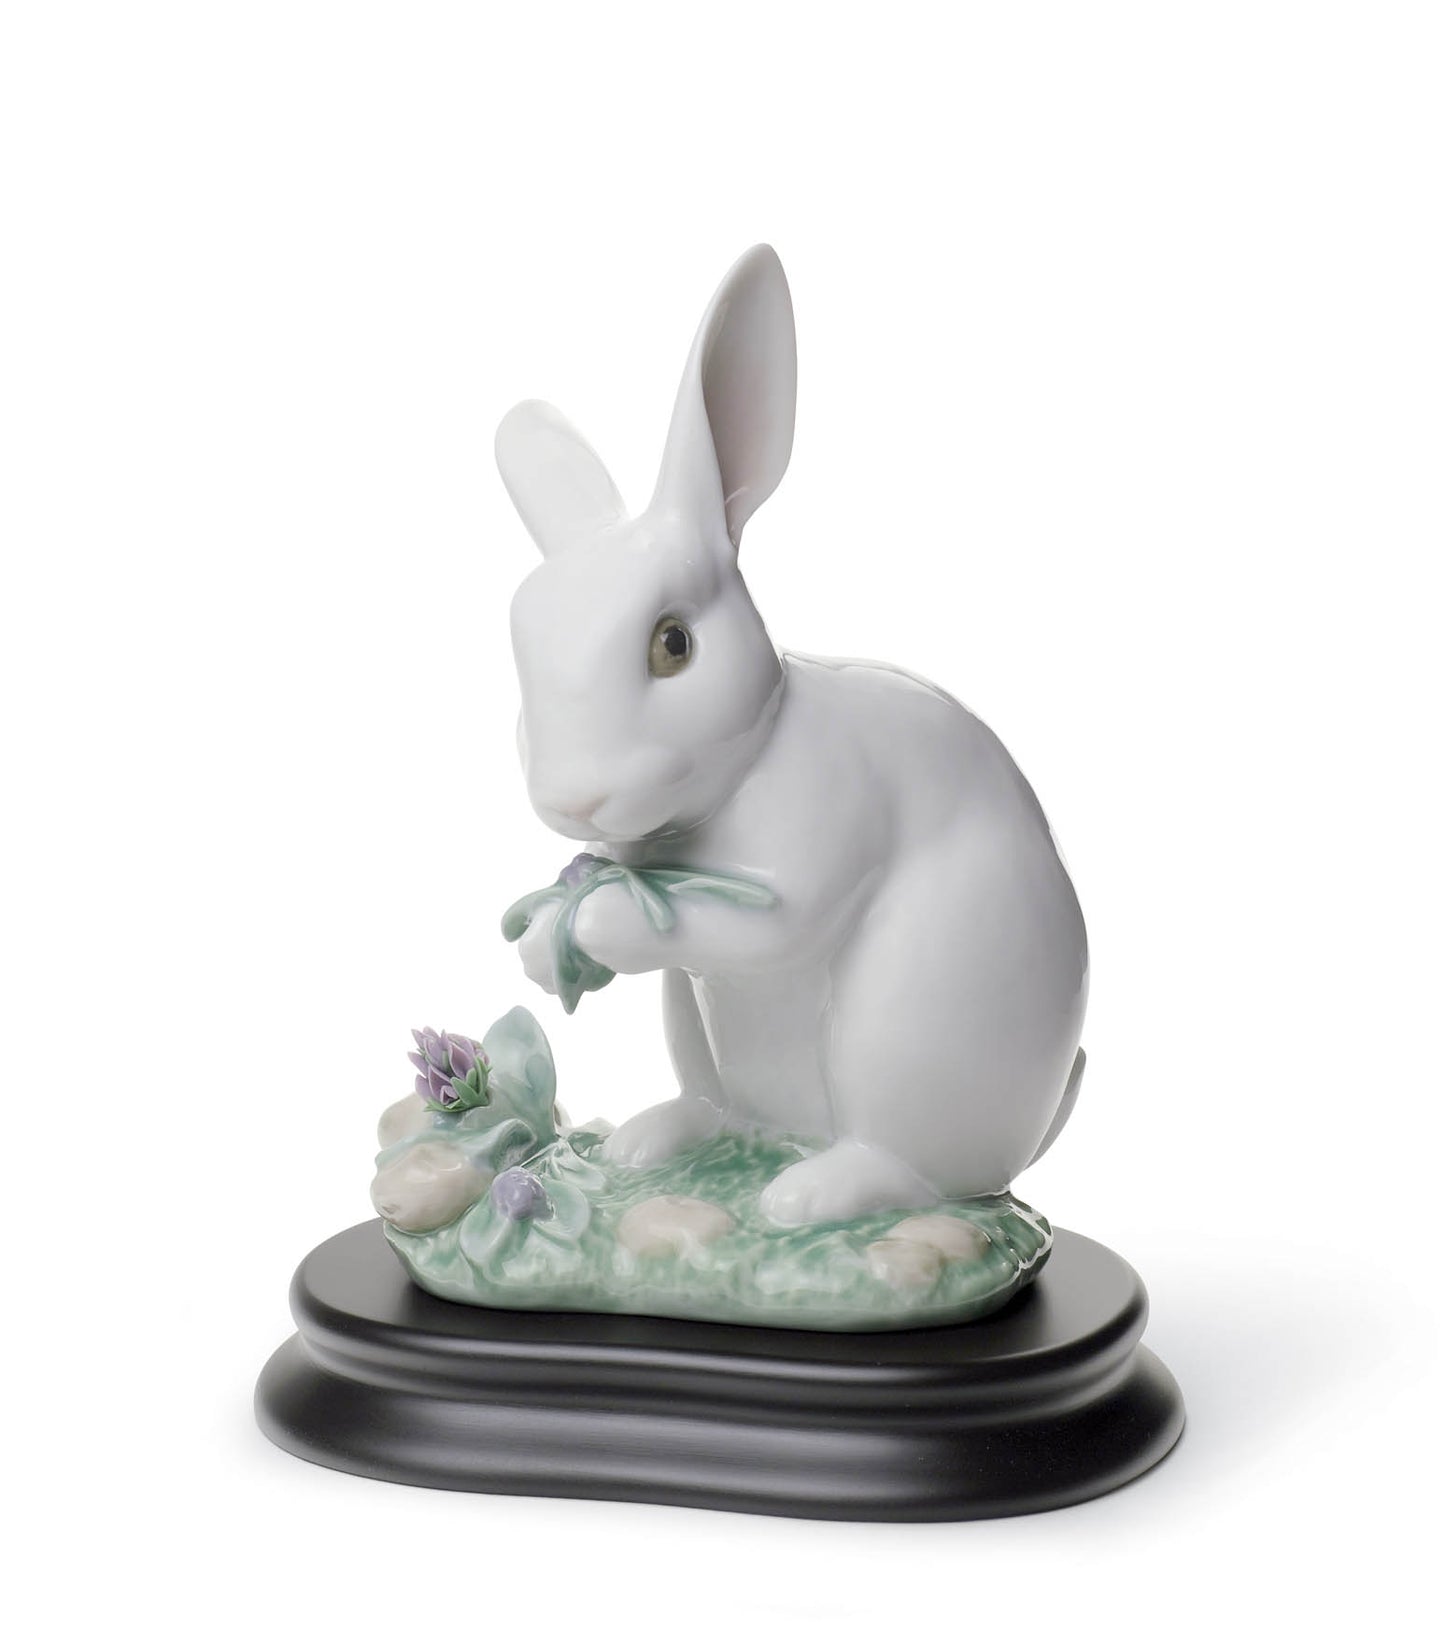 The Rabbit by Lladró